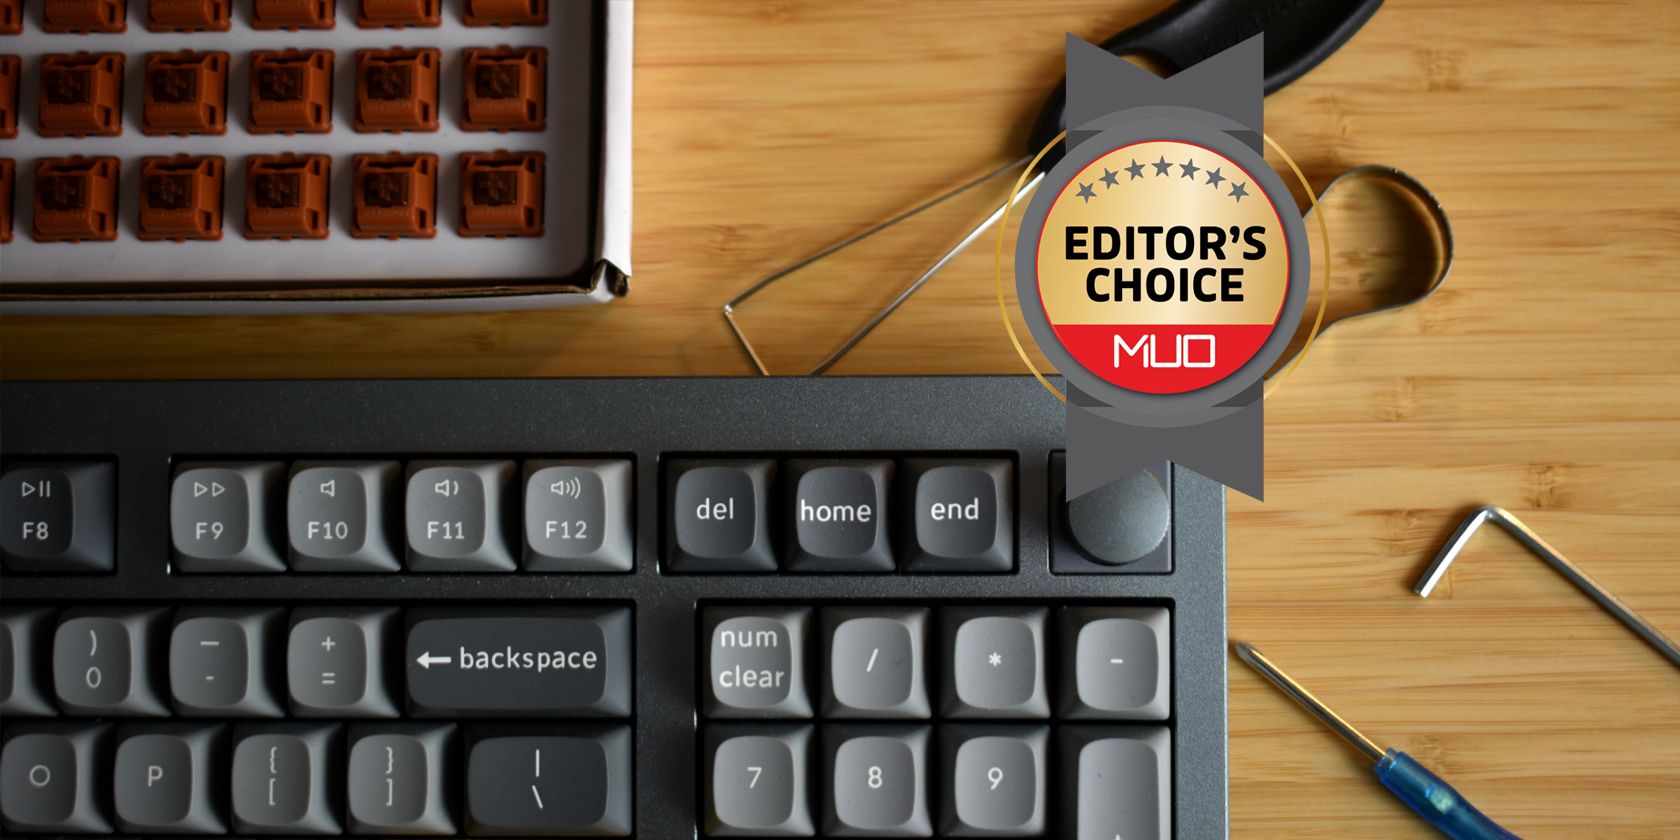 keychron q5 awarded editors choice